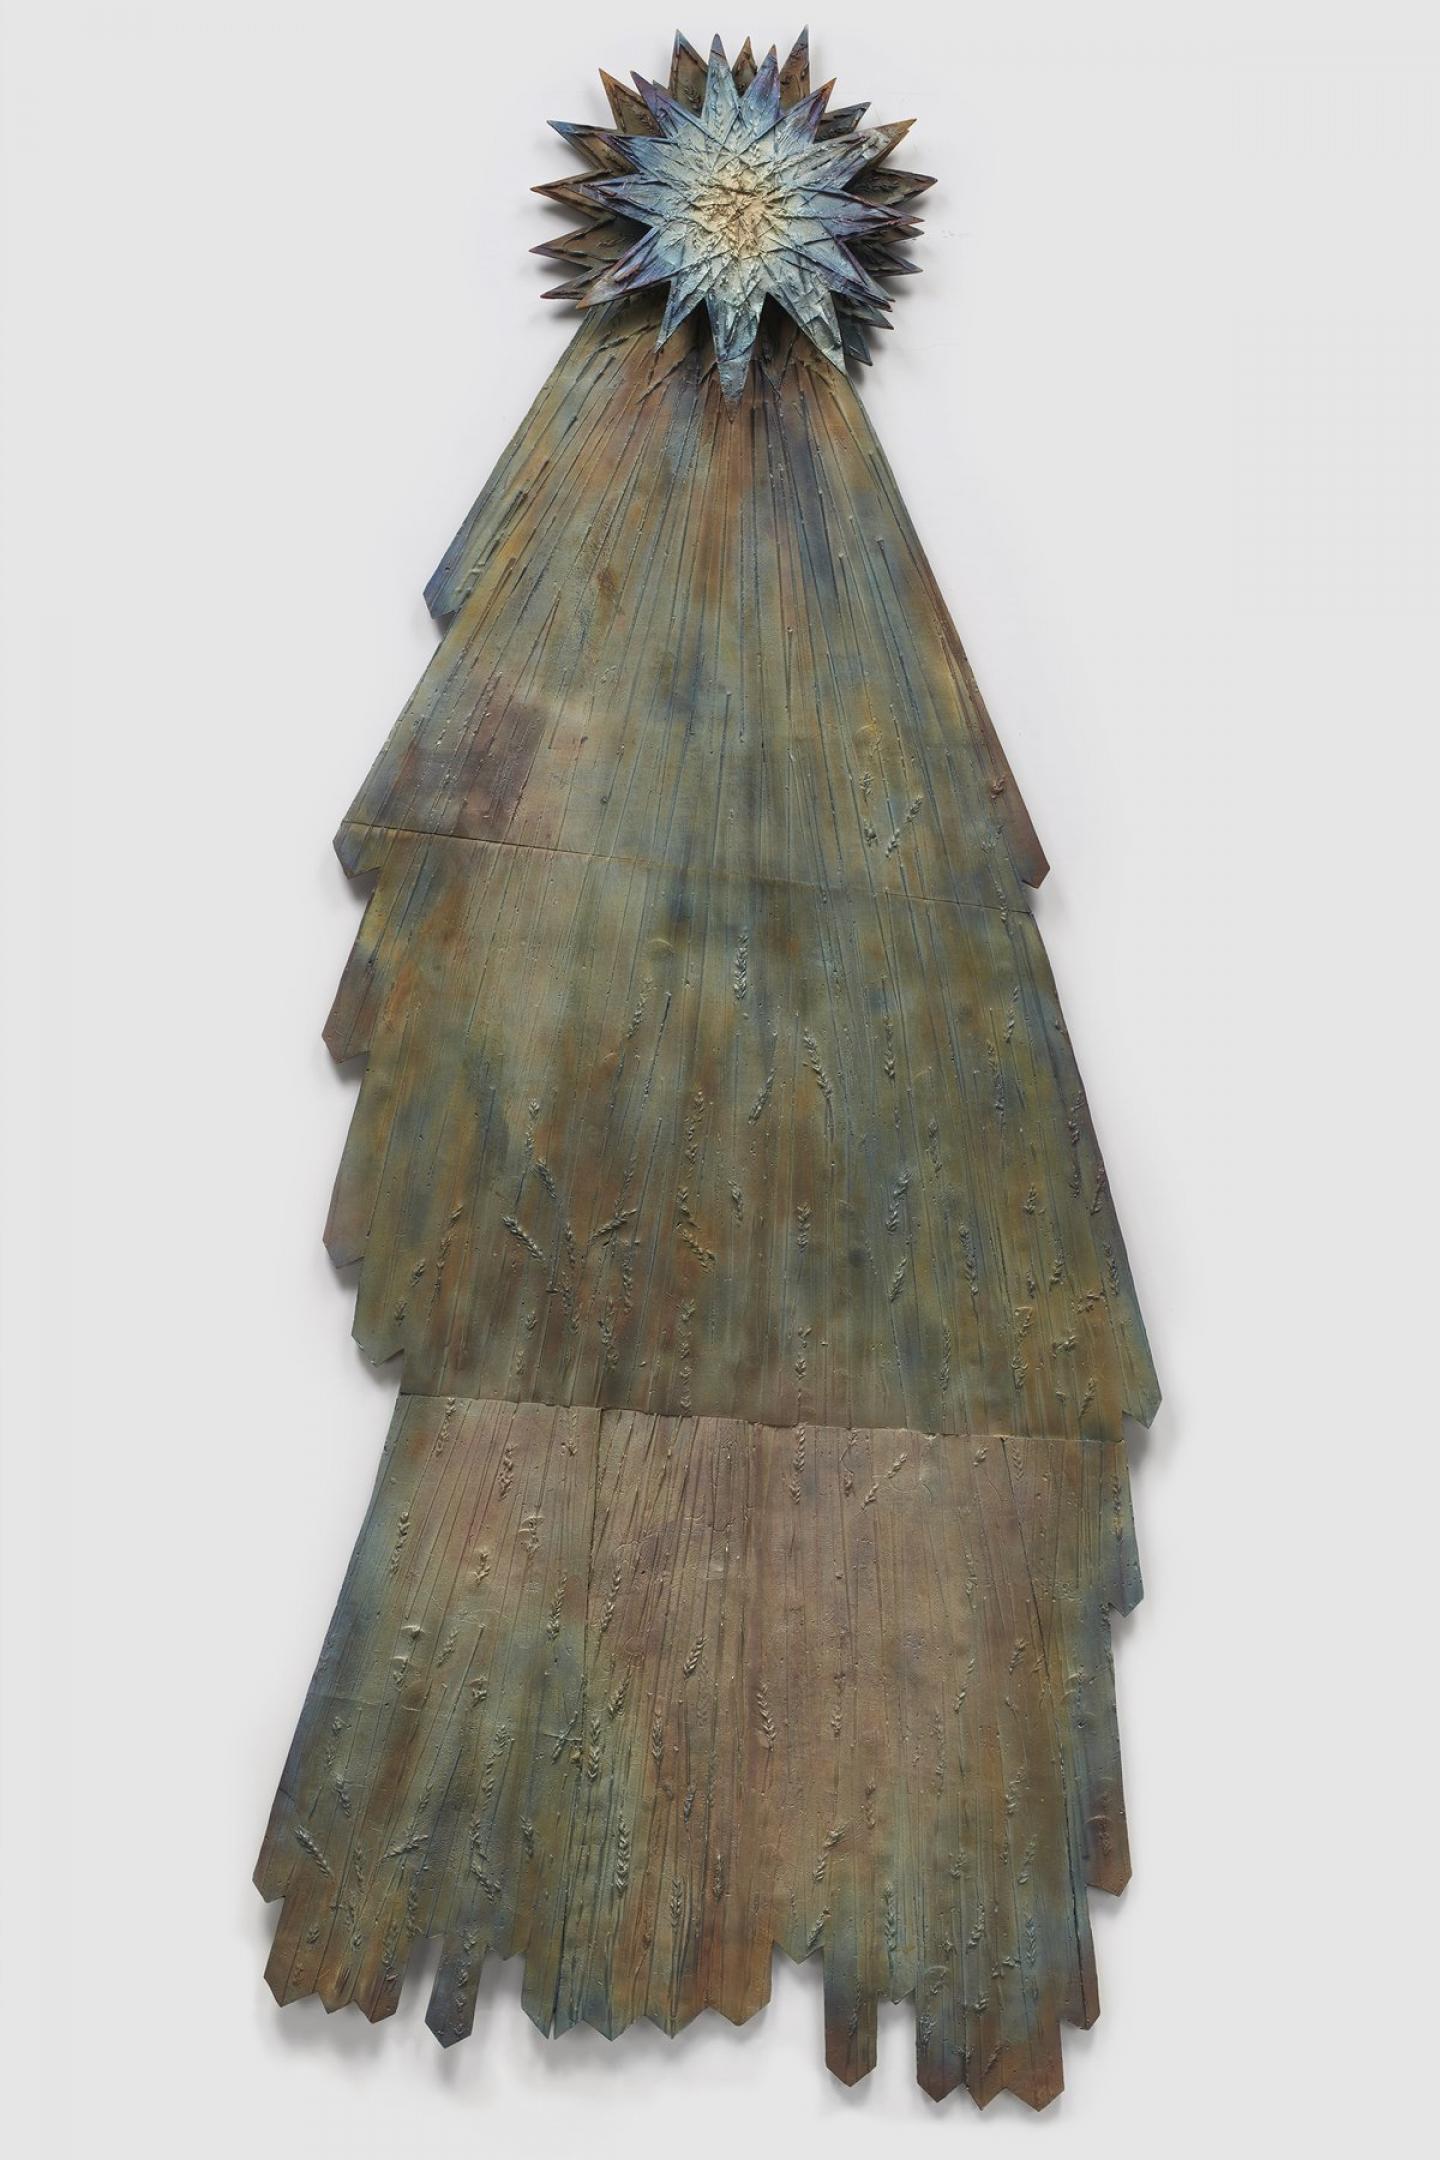 Kiki Smith, Sungrazer VI, 2019, bronze, 93" × 40" × 2-3/4" (236.2 cm × 101.6 cm × 7 cm), Edition of 3 + 1 AP © Kiki Smith